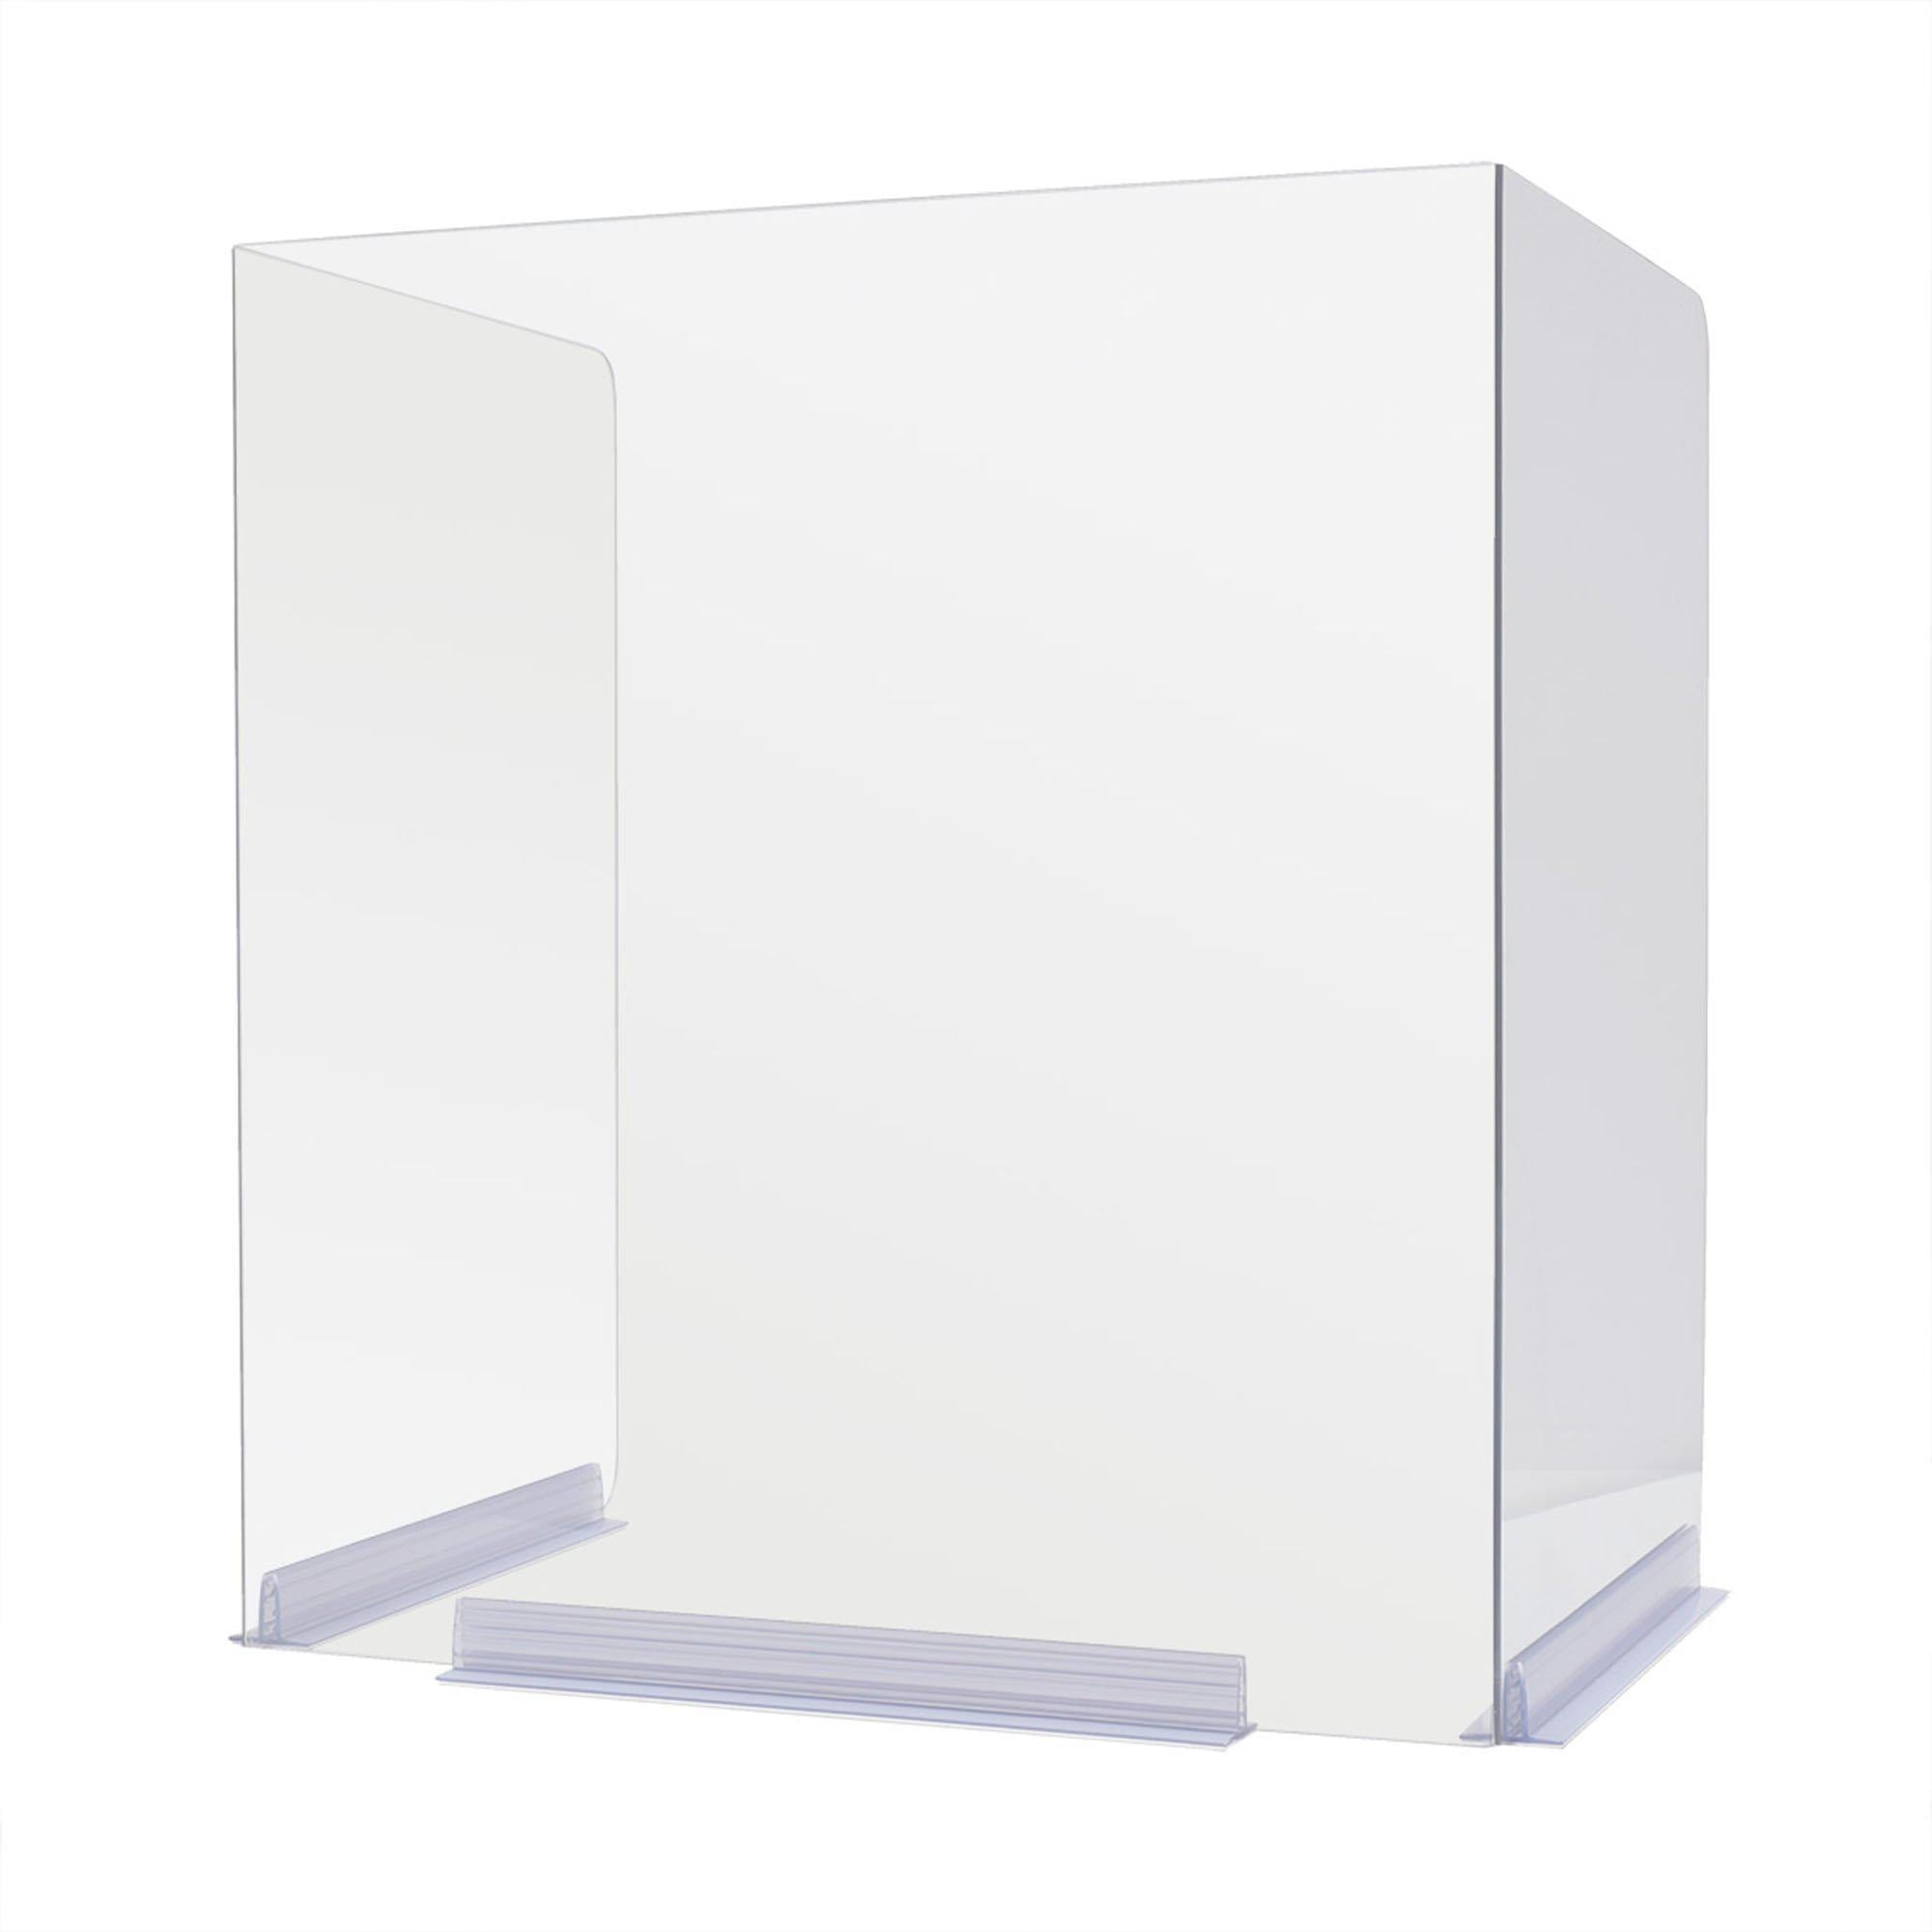 Classroom Bent-Edge Desktop Barrier and Sneeze Guard, 18" W x 14.5" x 18" H